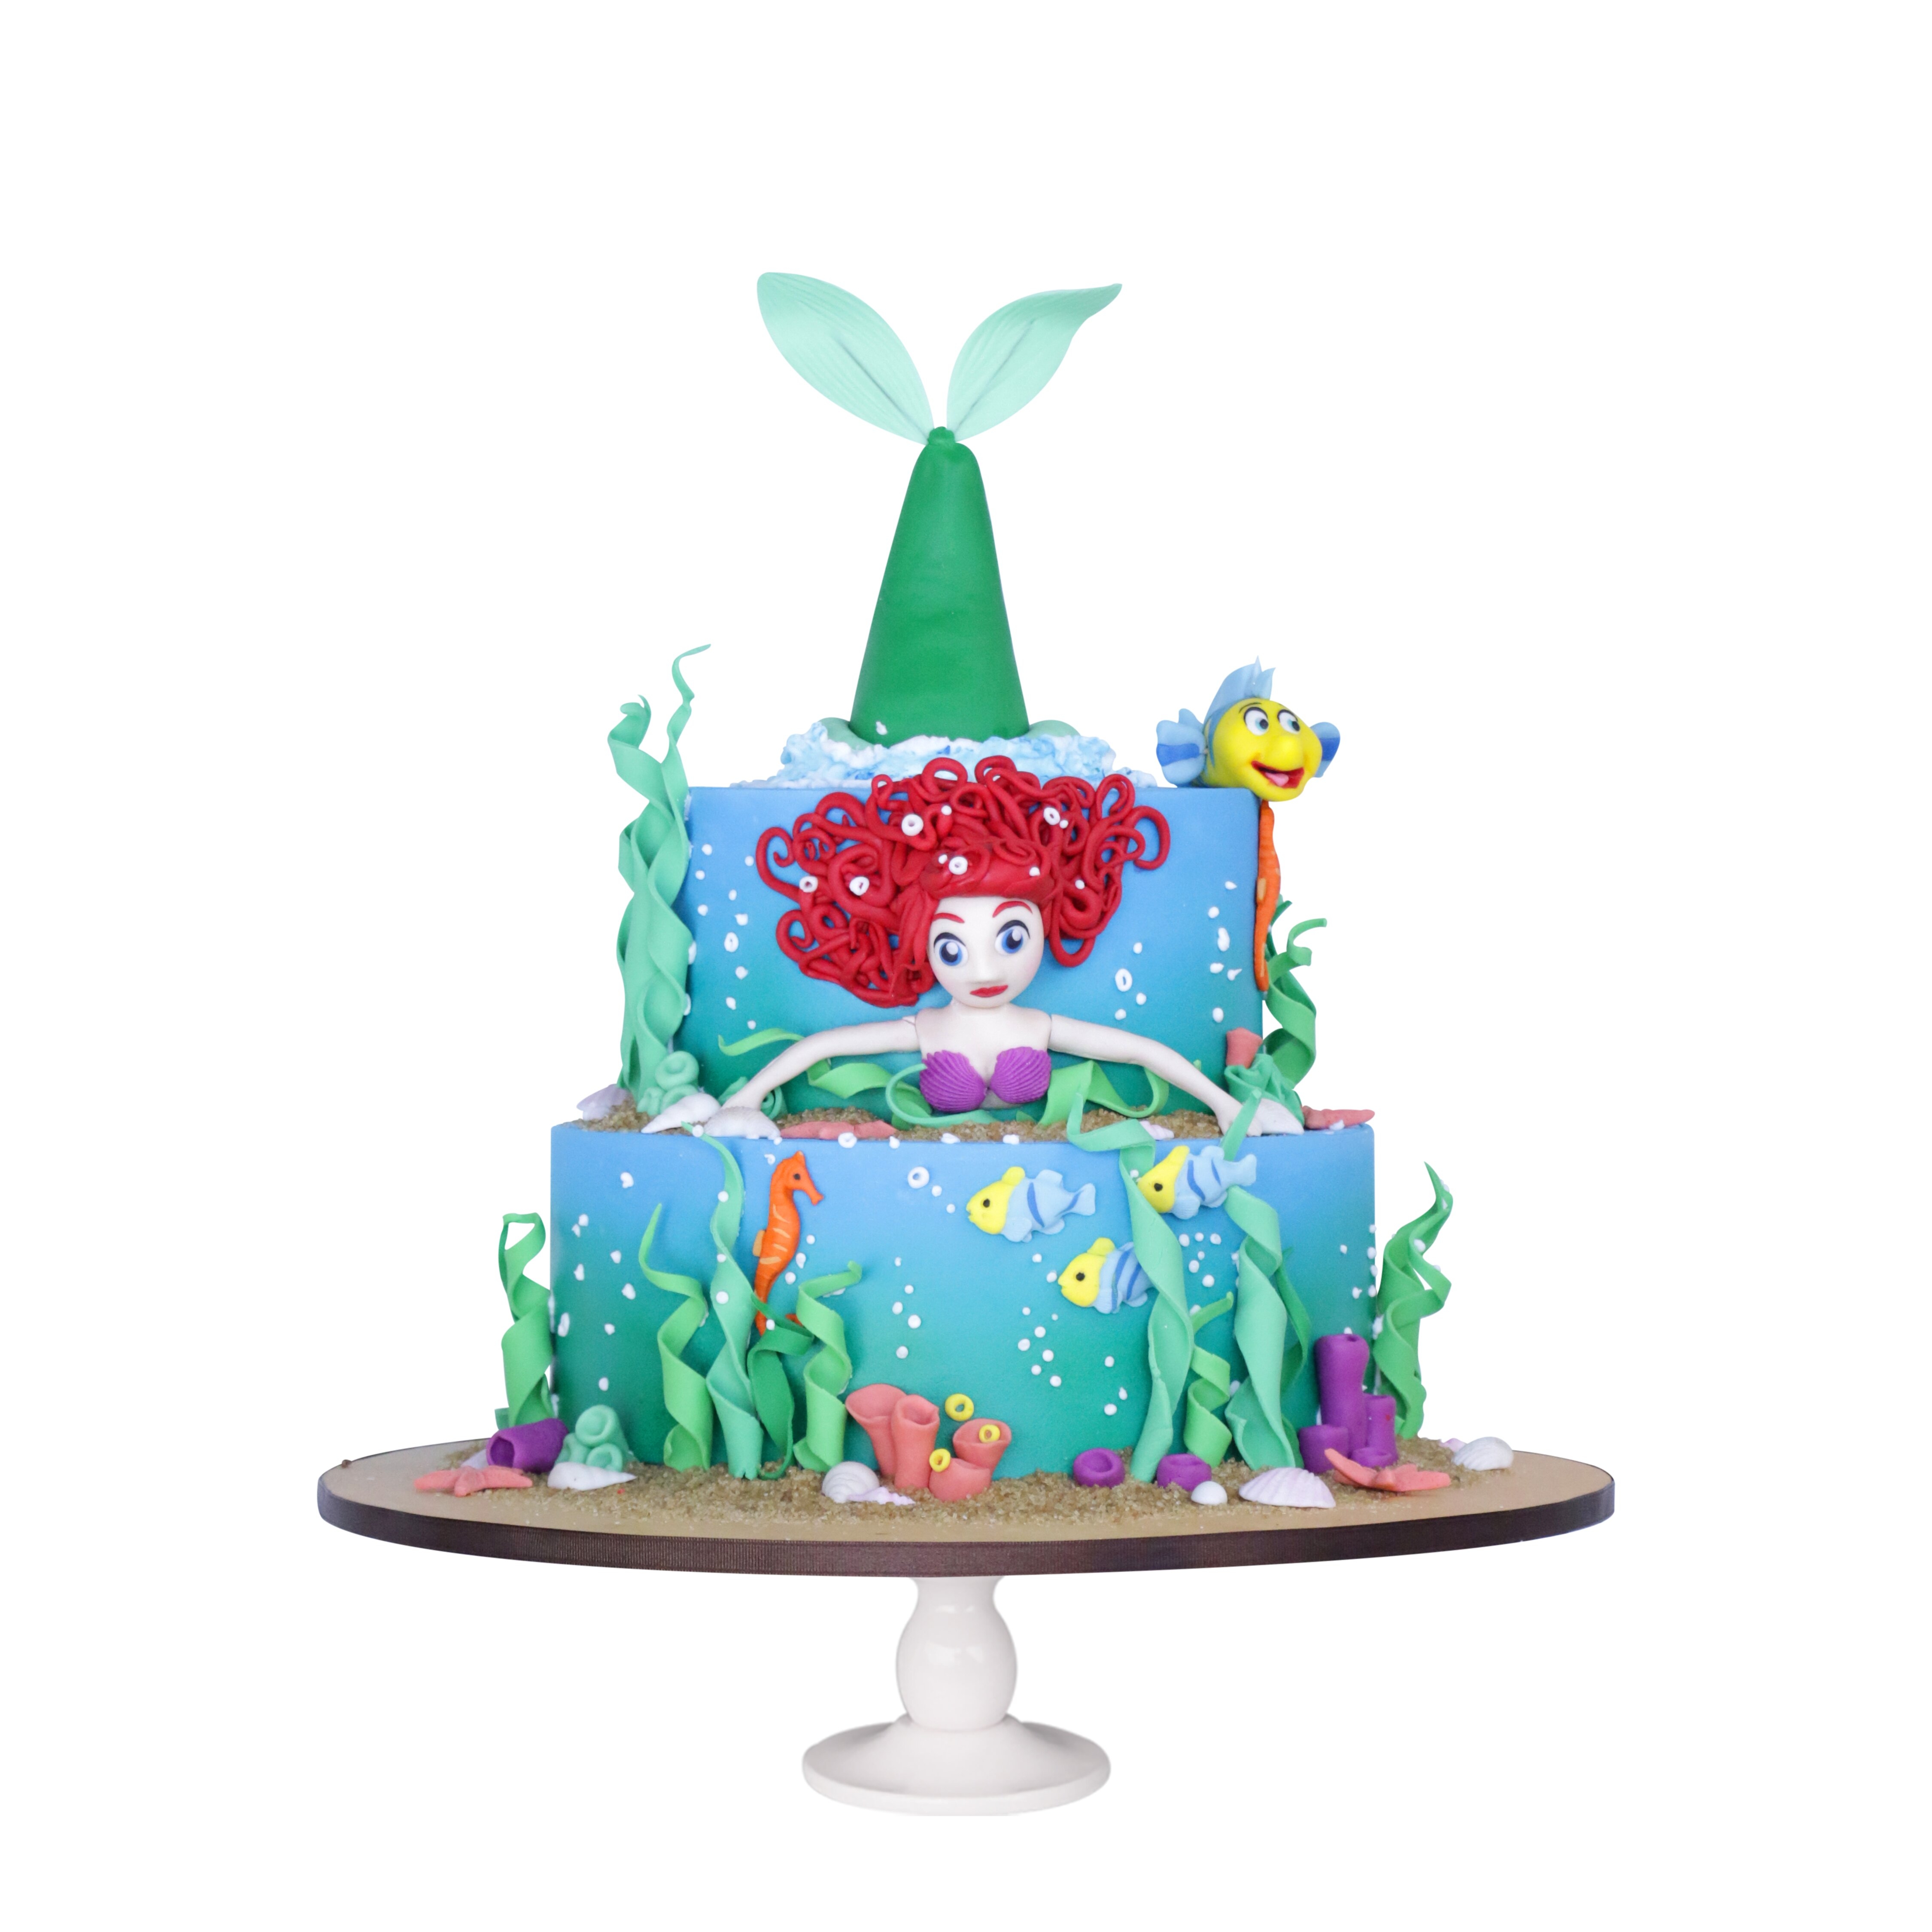 Princess Ariel - Pastel decorado de la sirenita -